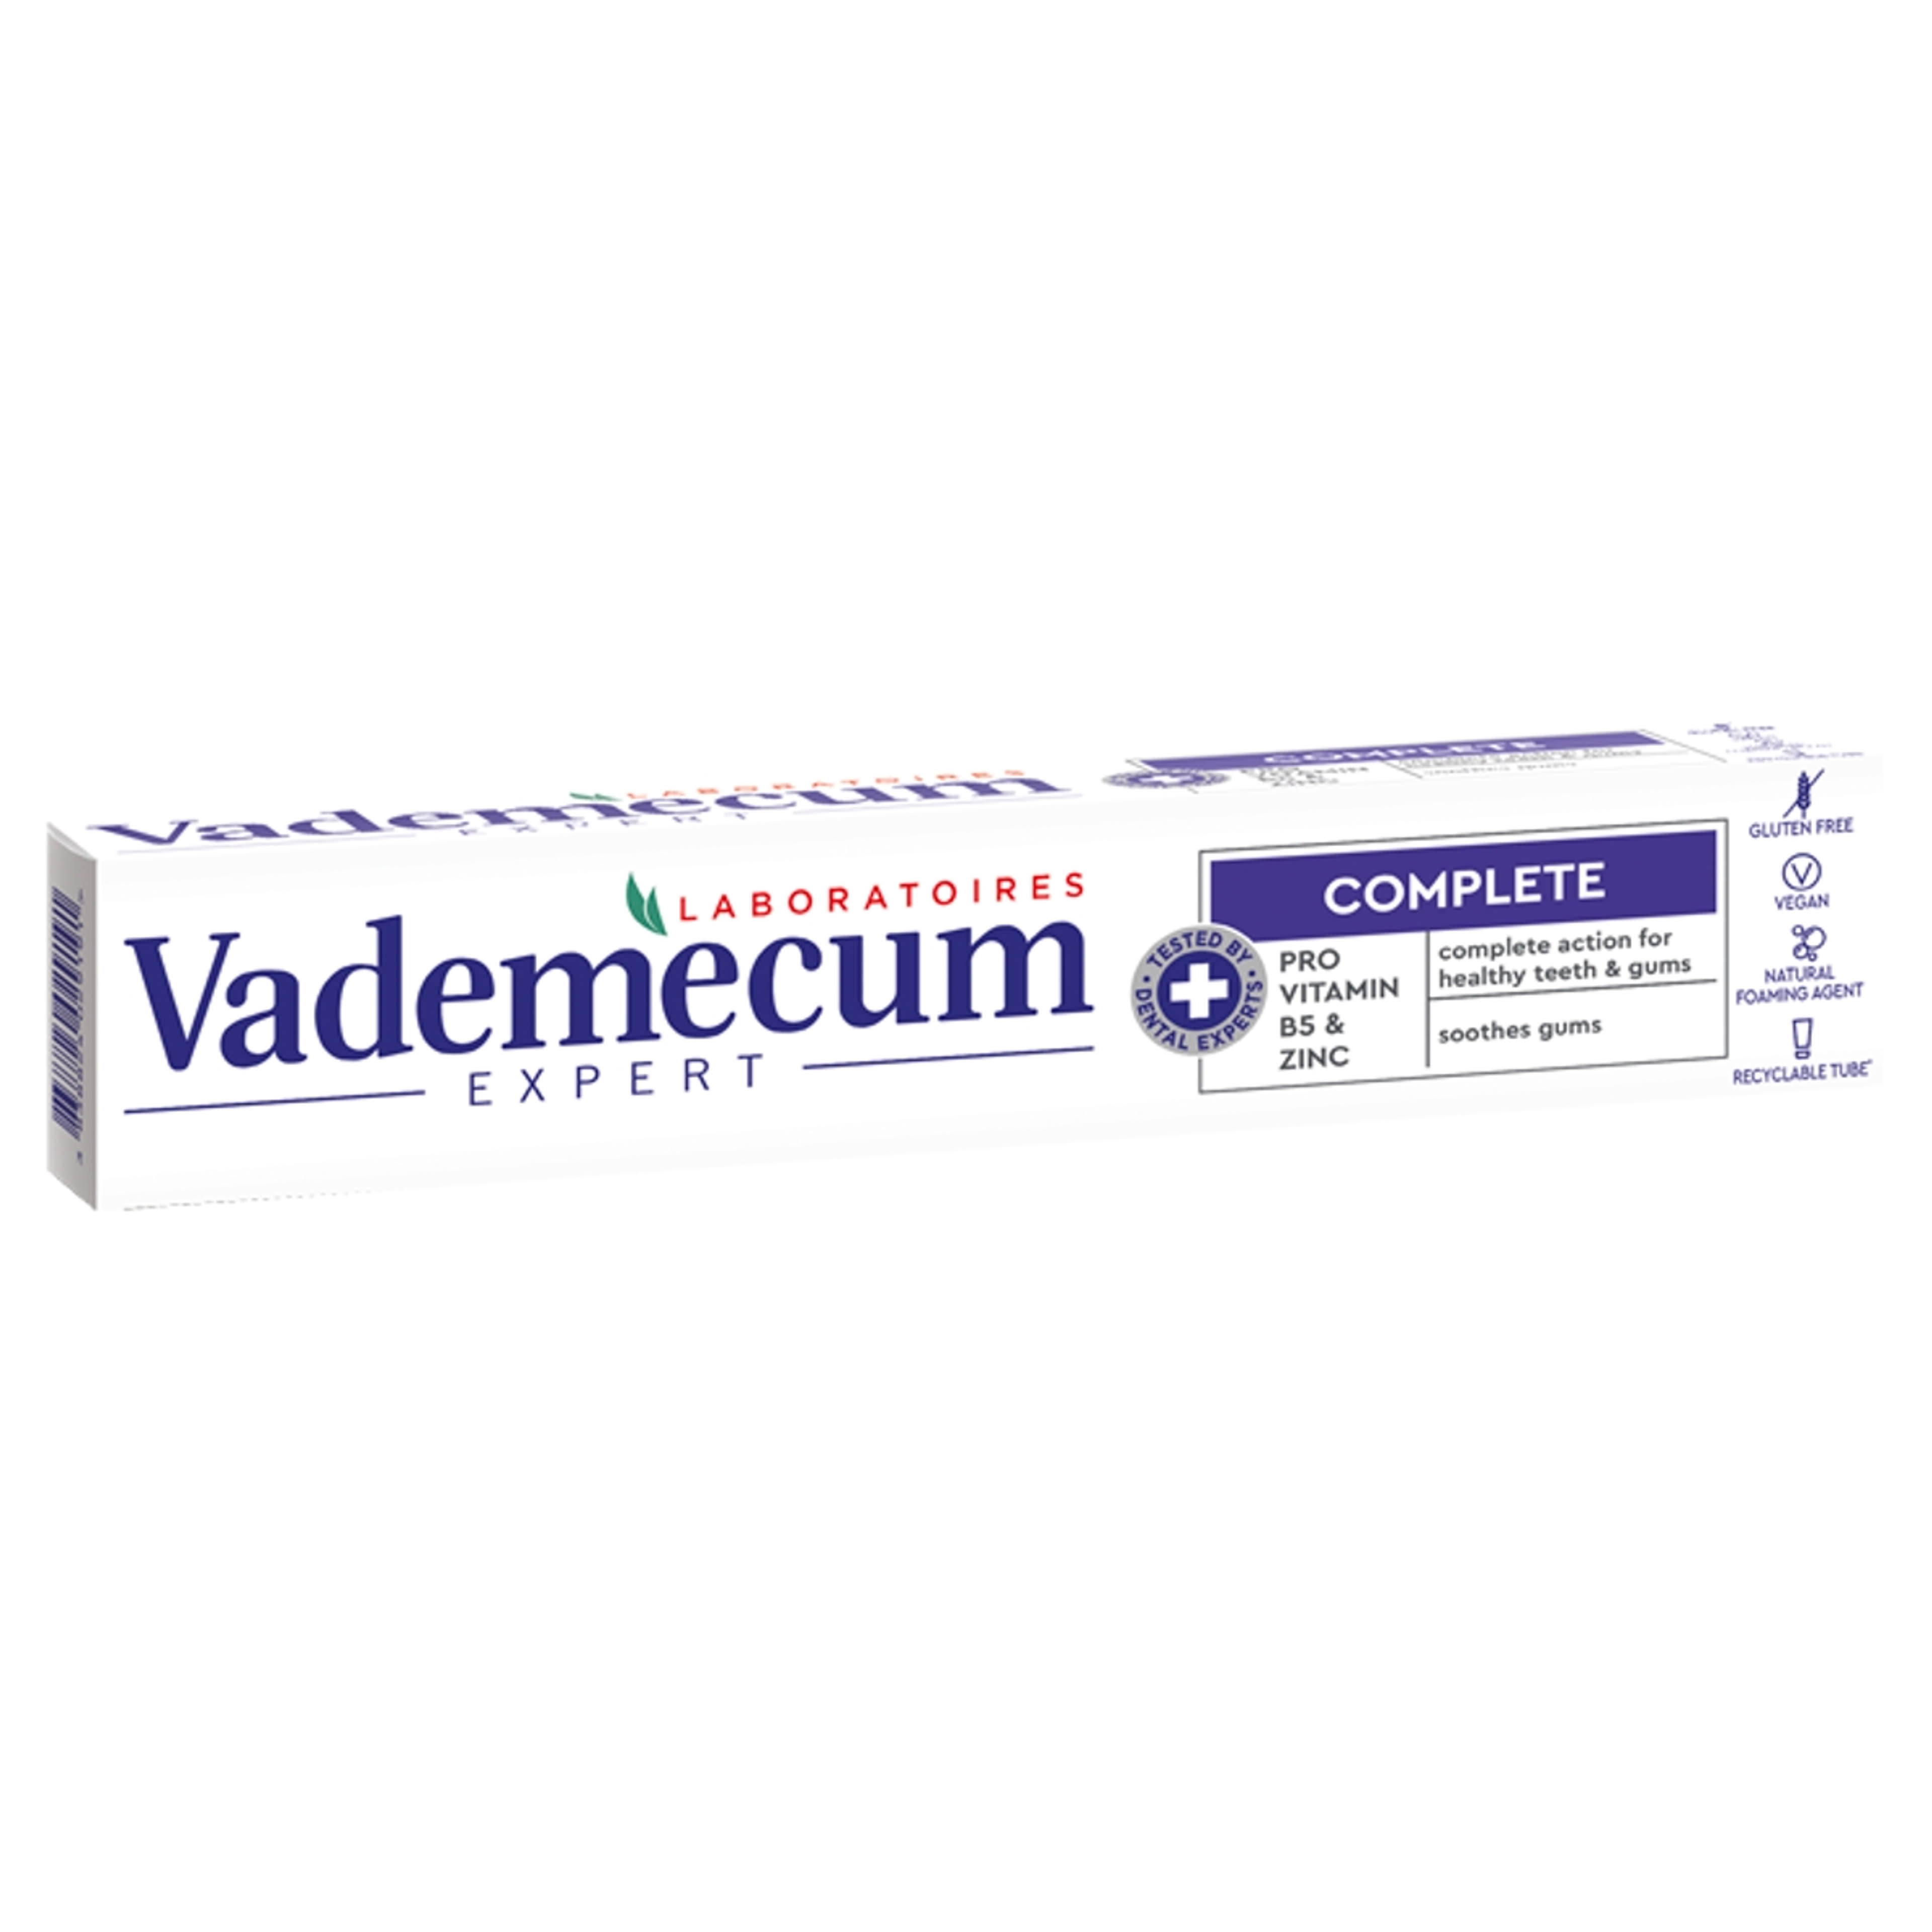 Vademecum Expert Pro Vitamin Complete fogkrém - 75 ml